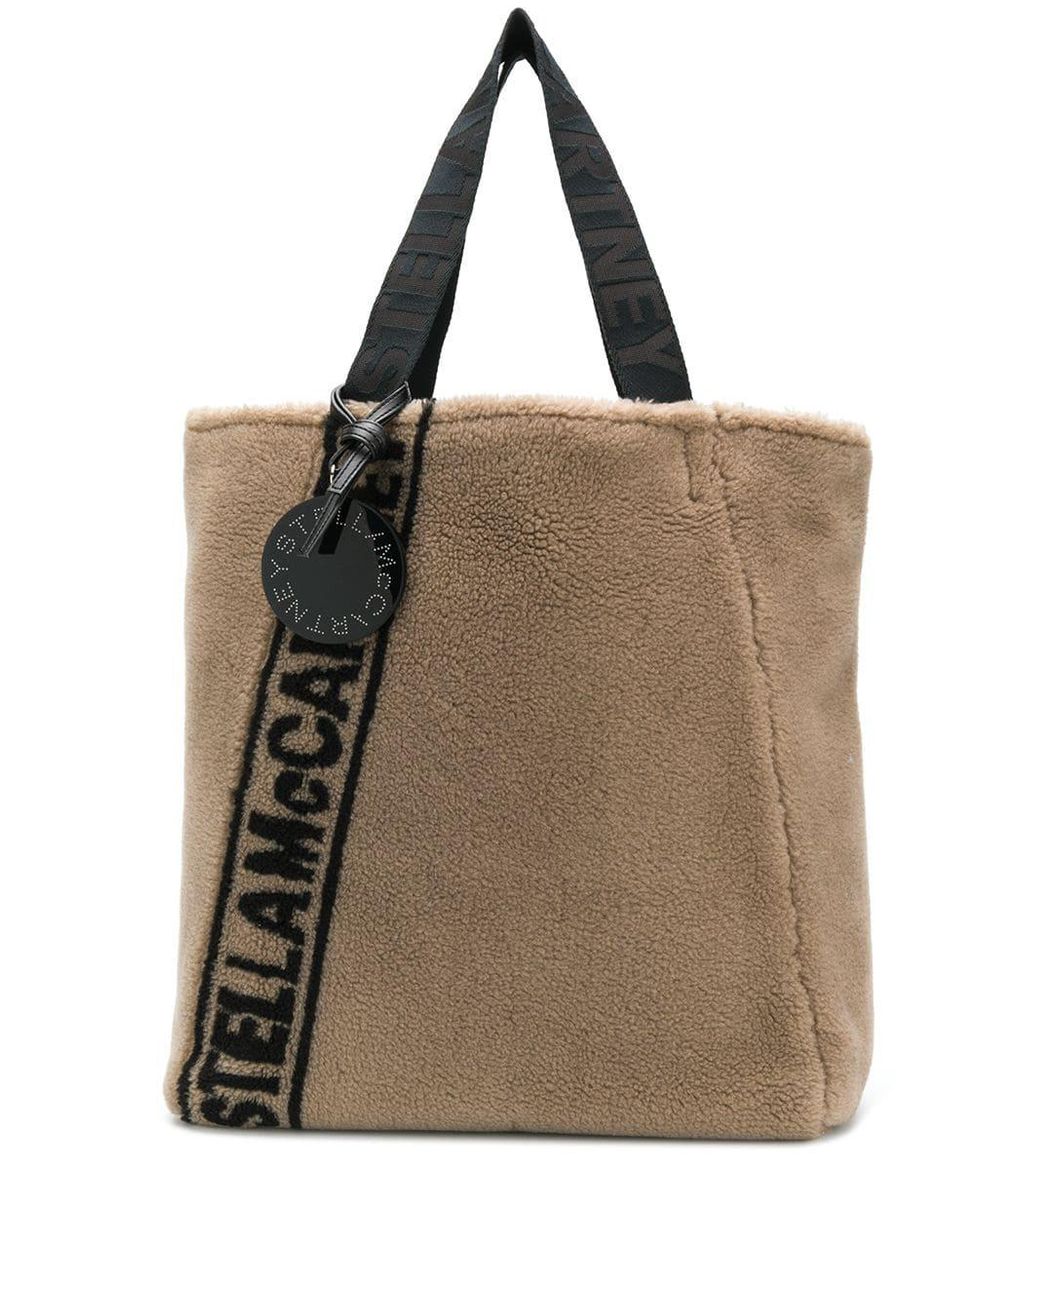 Stella McCartney Contrast Logo Tote Bag in Brown,Black (Brown) - Save